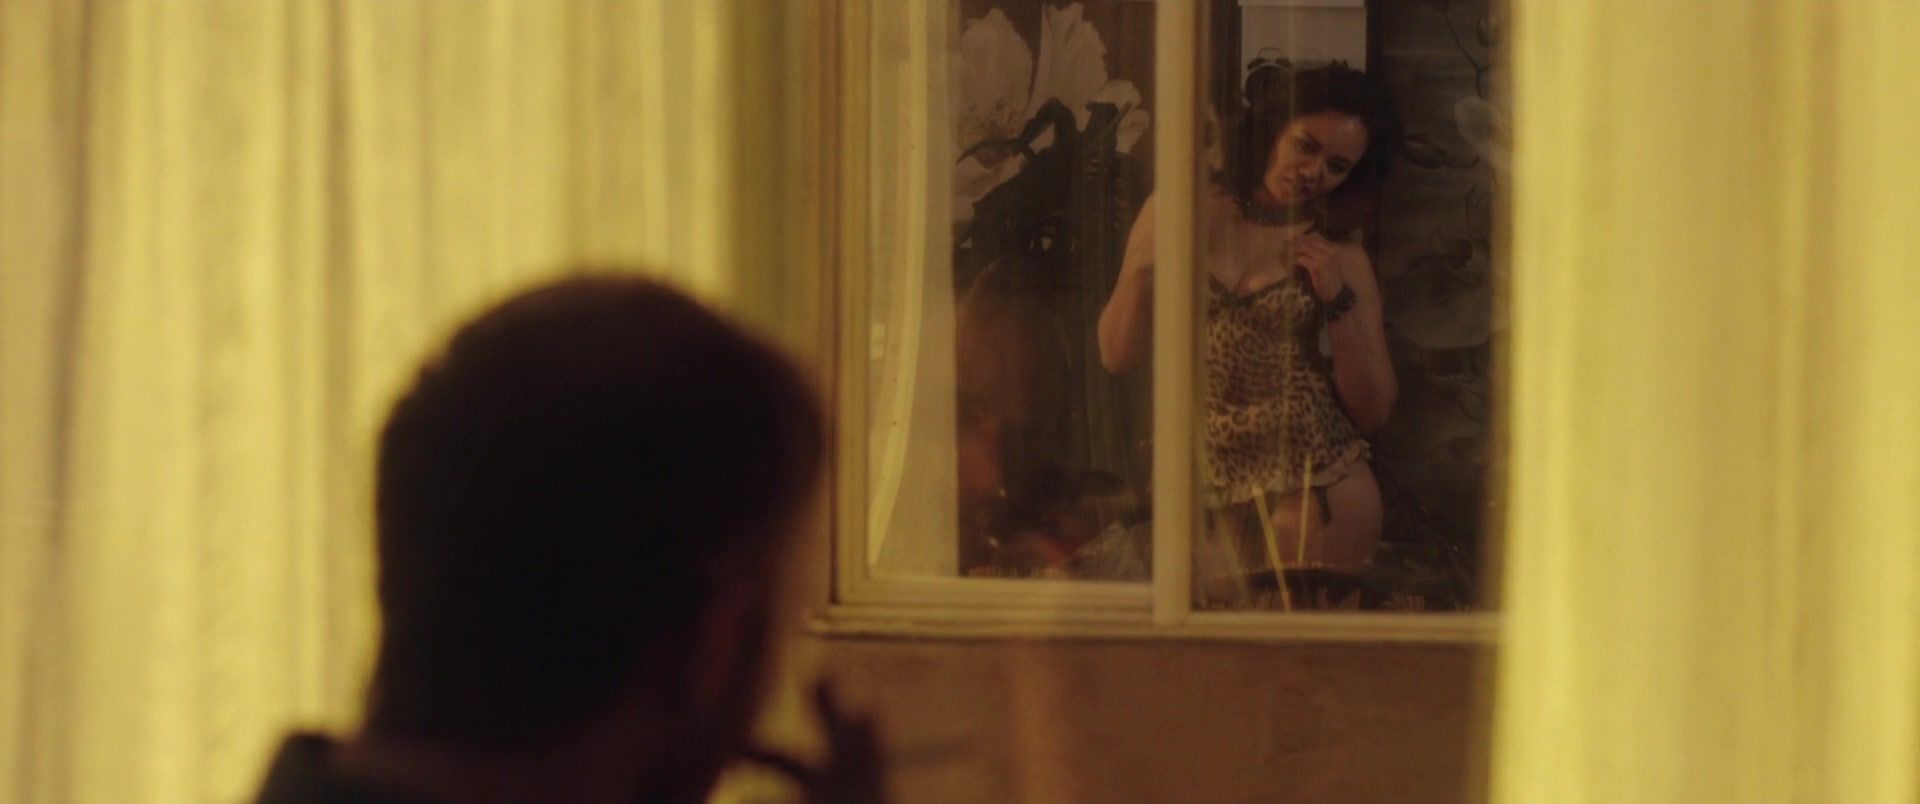 ThePorndude Annie Cruz nude - Paint It Red (2018) Amature Sex - 2